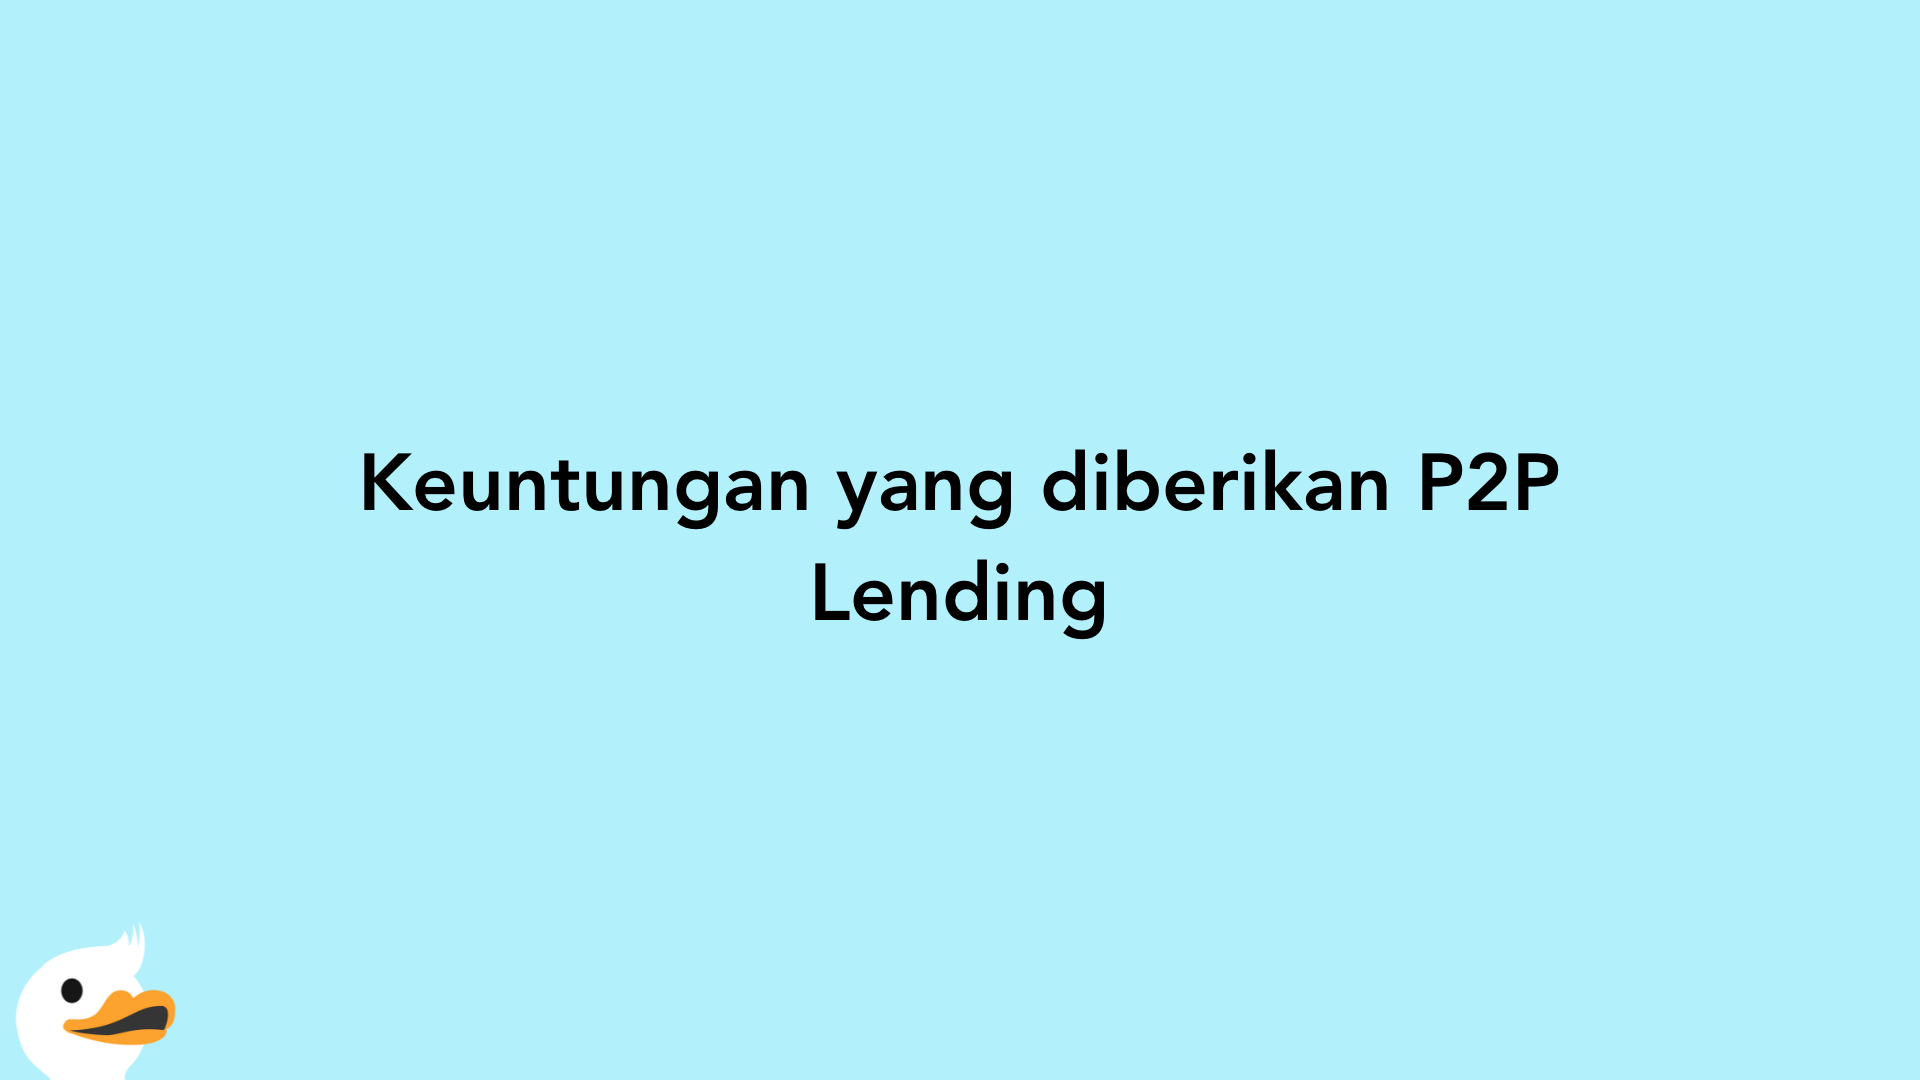 Keuntungan yang diberikan P2P Lending